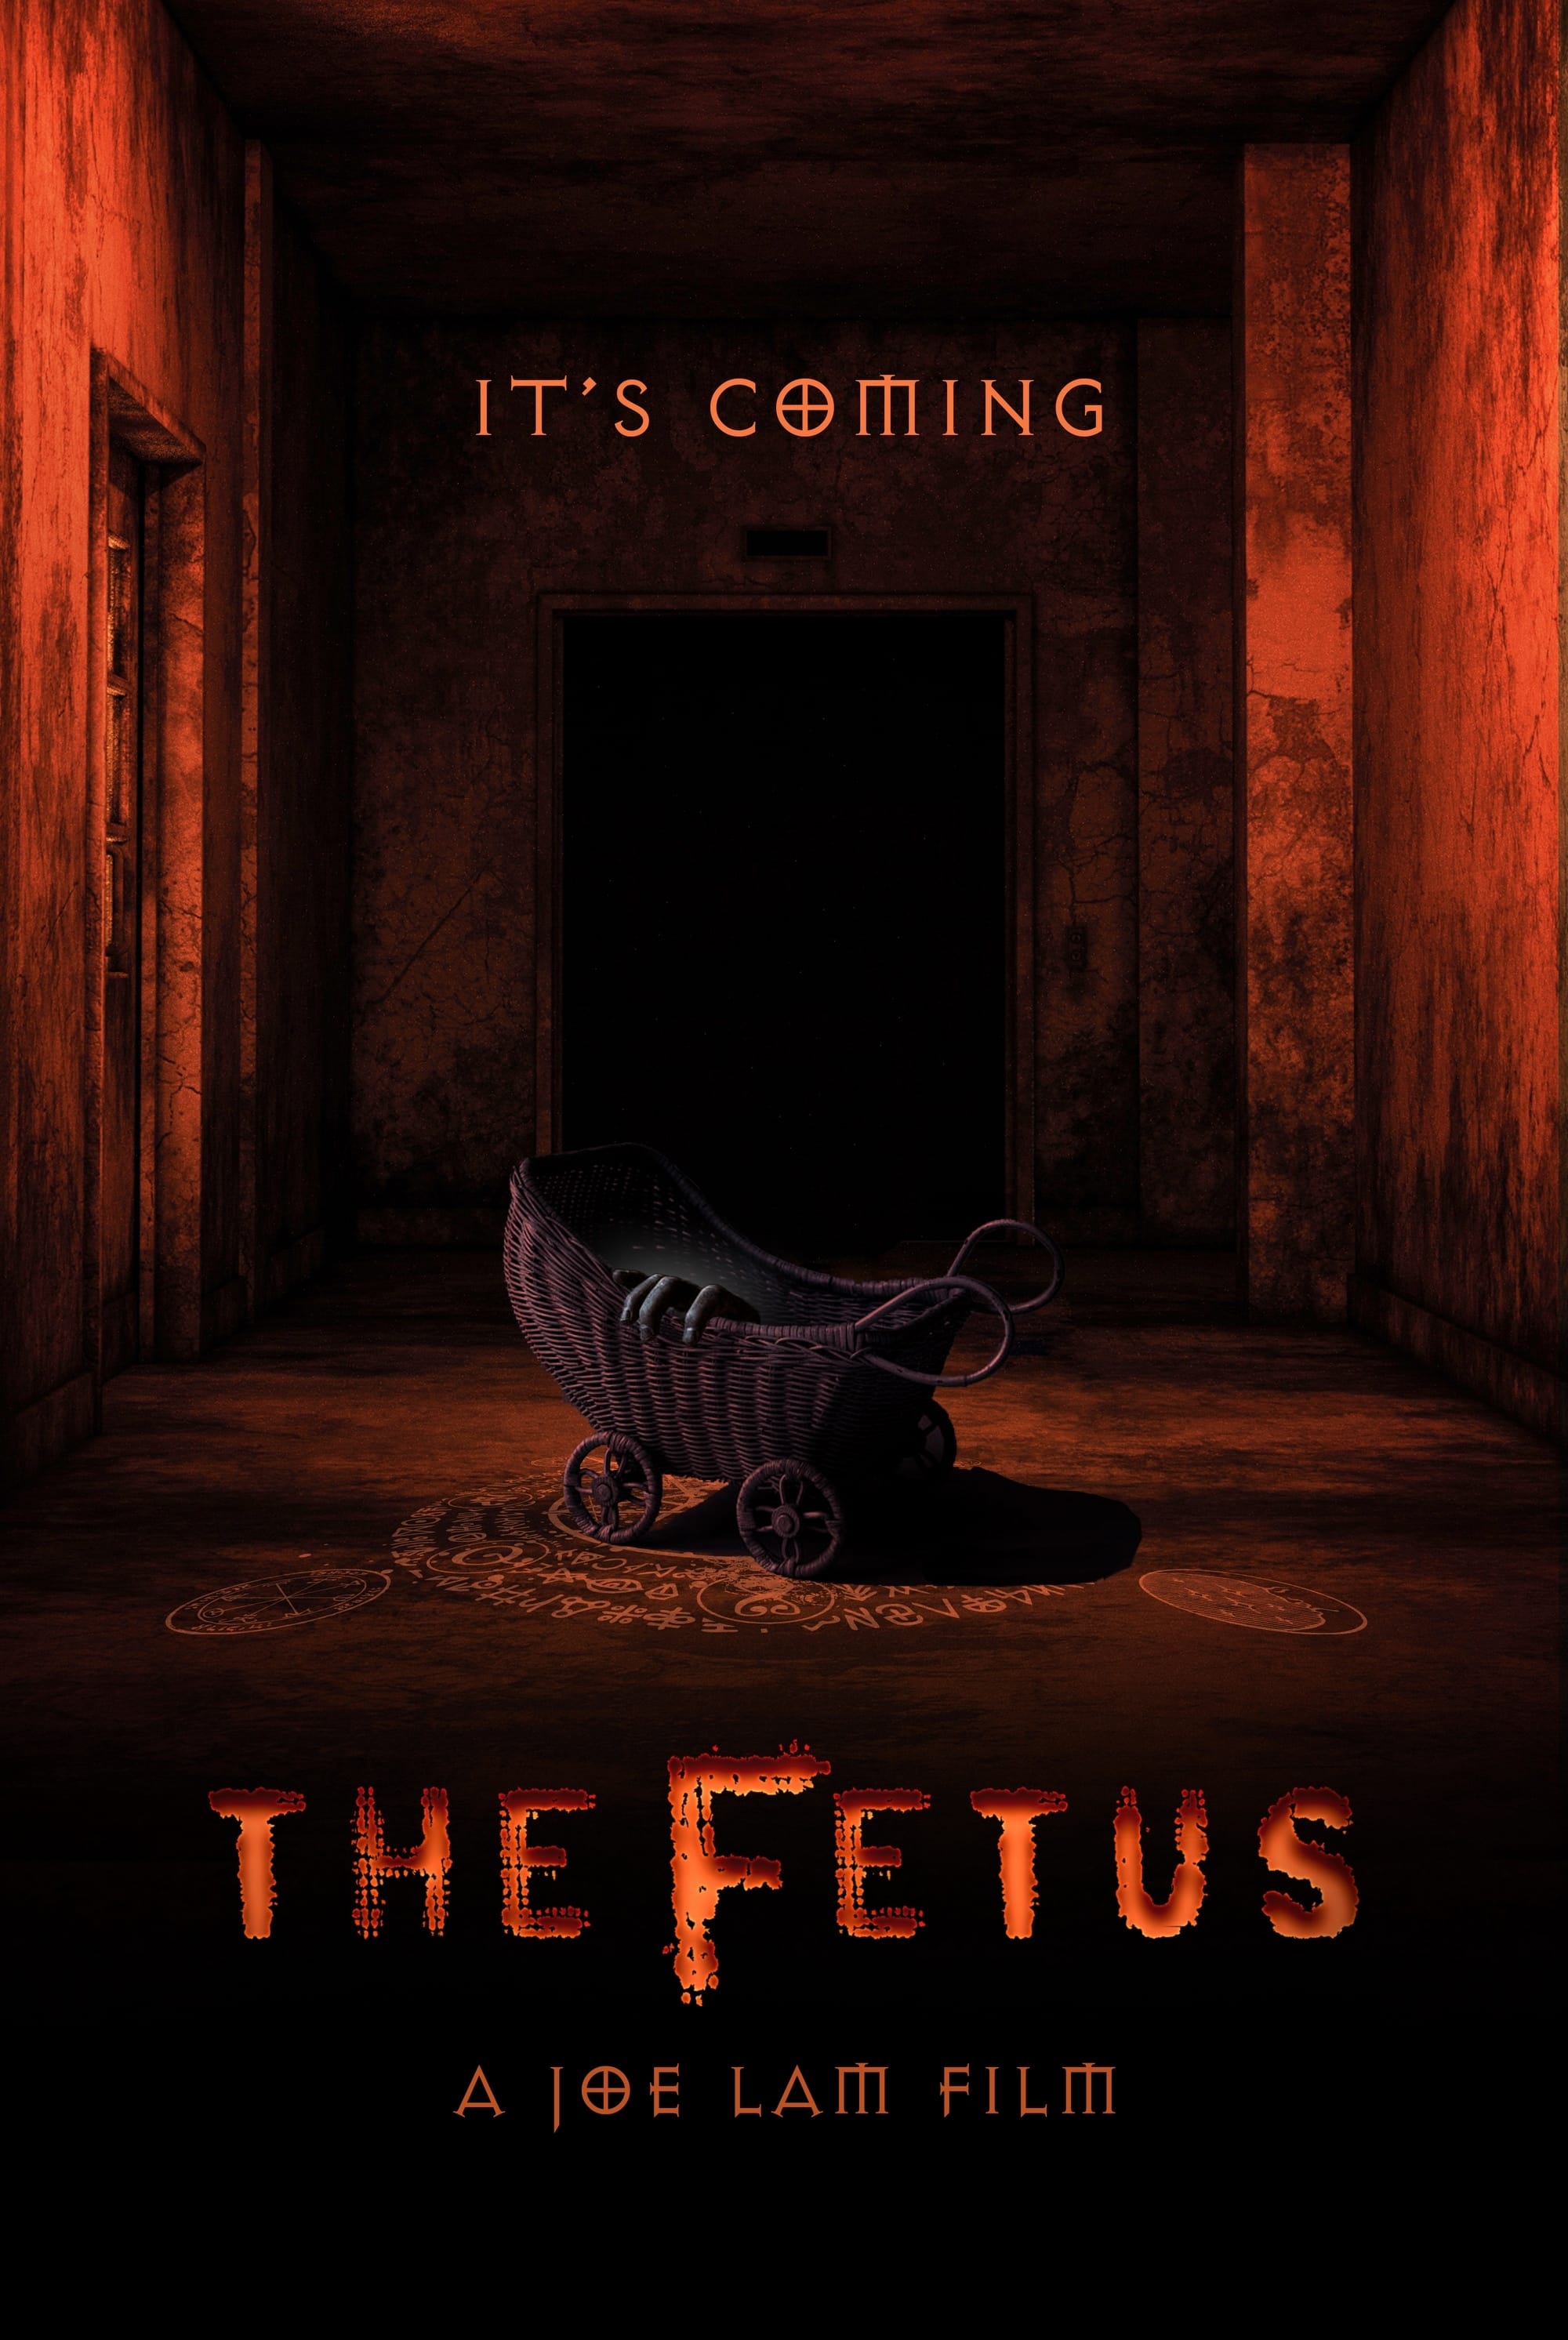 The Fetus